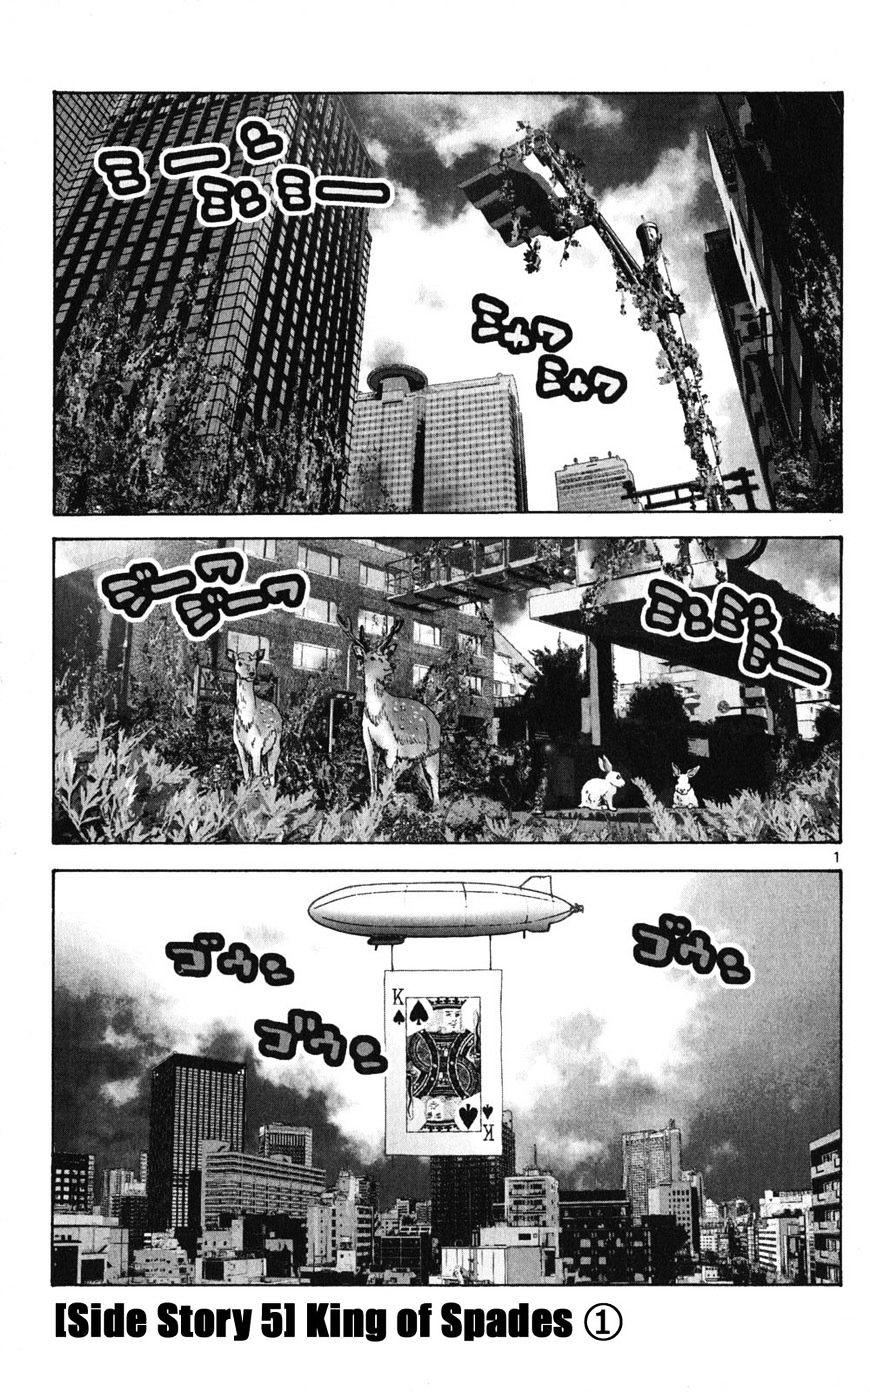 Imawa No Kuni No Alice Chapter 49.1 : Side Story 5 - King Of Spades (1) page 1 - Mangakakalot